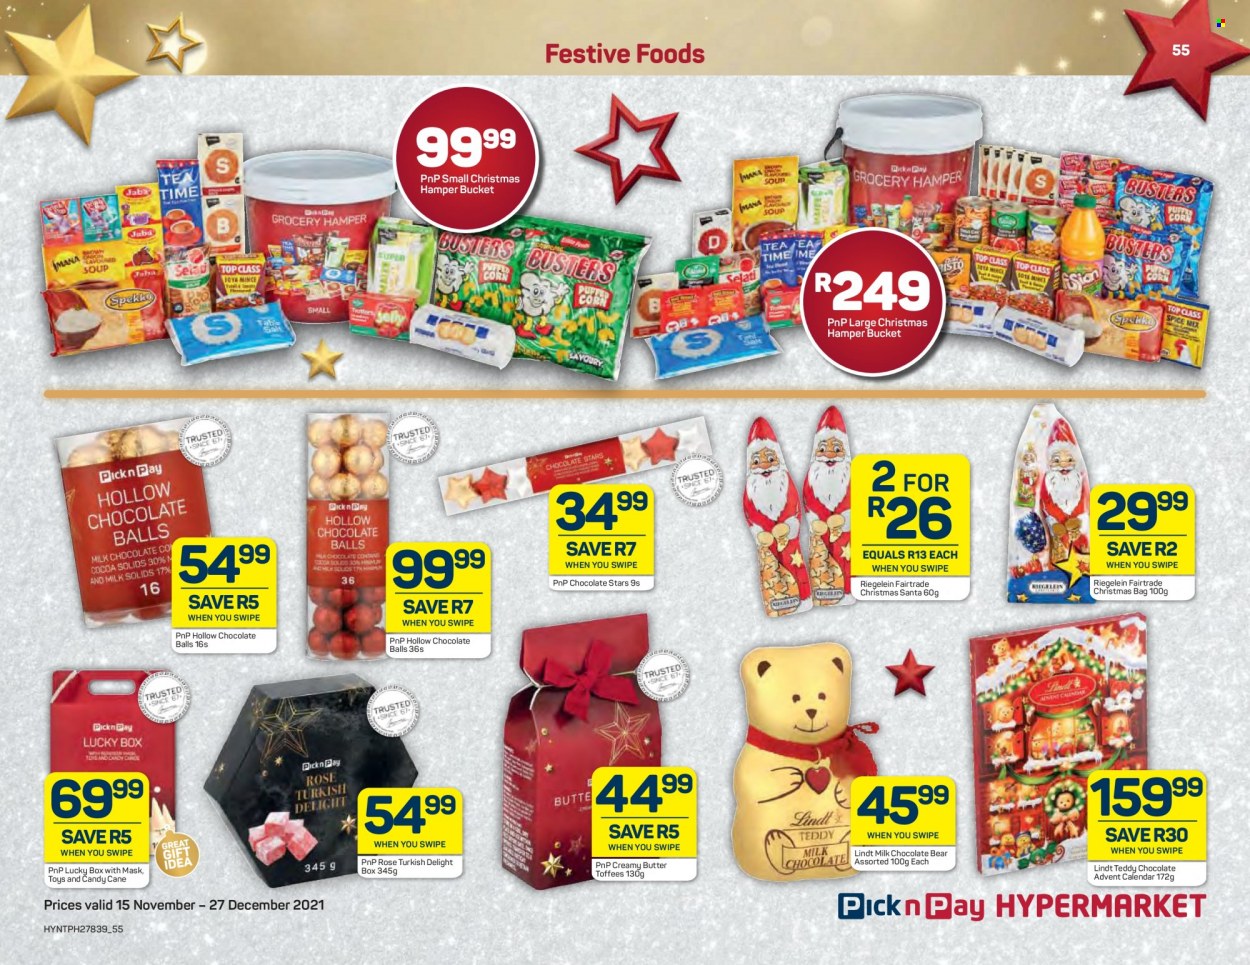 Pick n Pay Hypermarket specials - 11.15.2021 - 12.27.2021. 